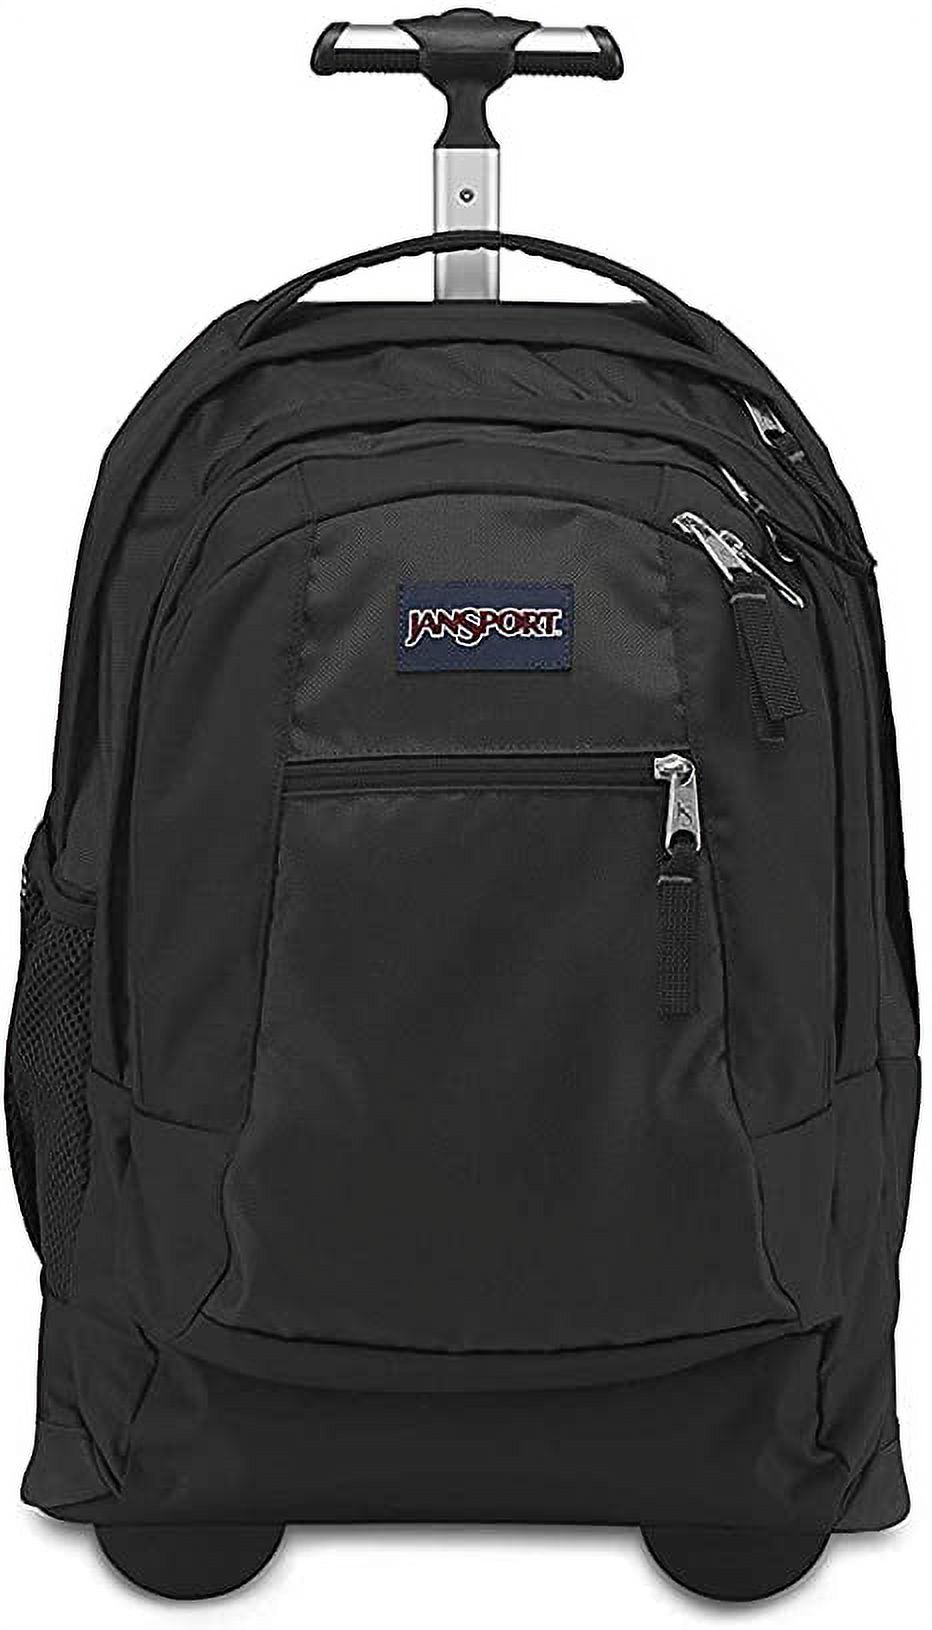 JanSport Driver 8 Rolling Backpack - Wheeled Travel Bag with 15-Inch Laptop Sleeve (Black) - image 1 of 4